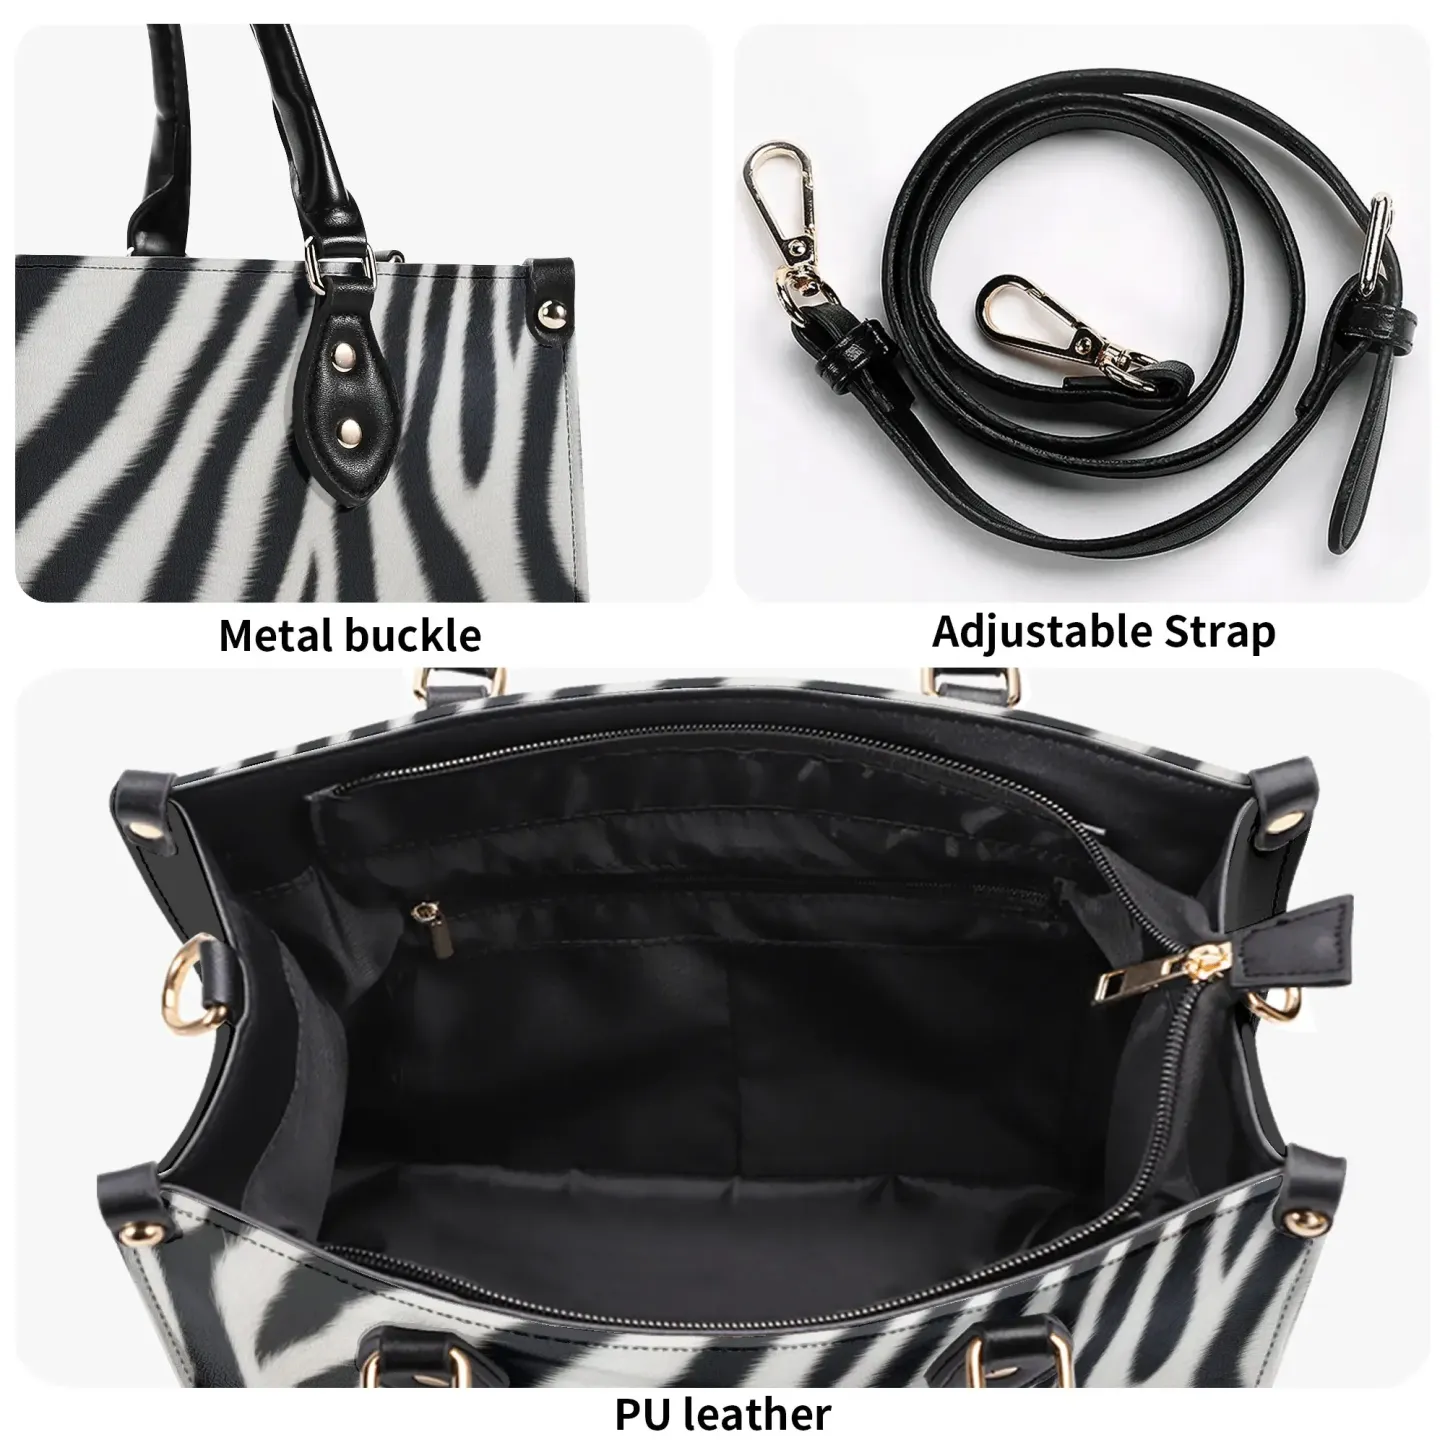 Personalized Leather Handbag Zebra